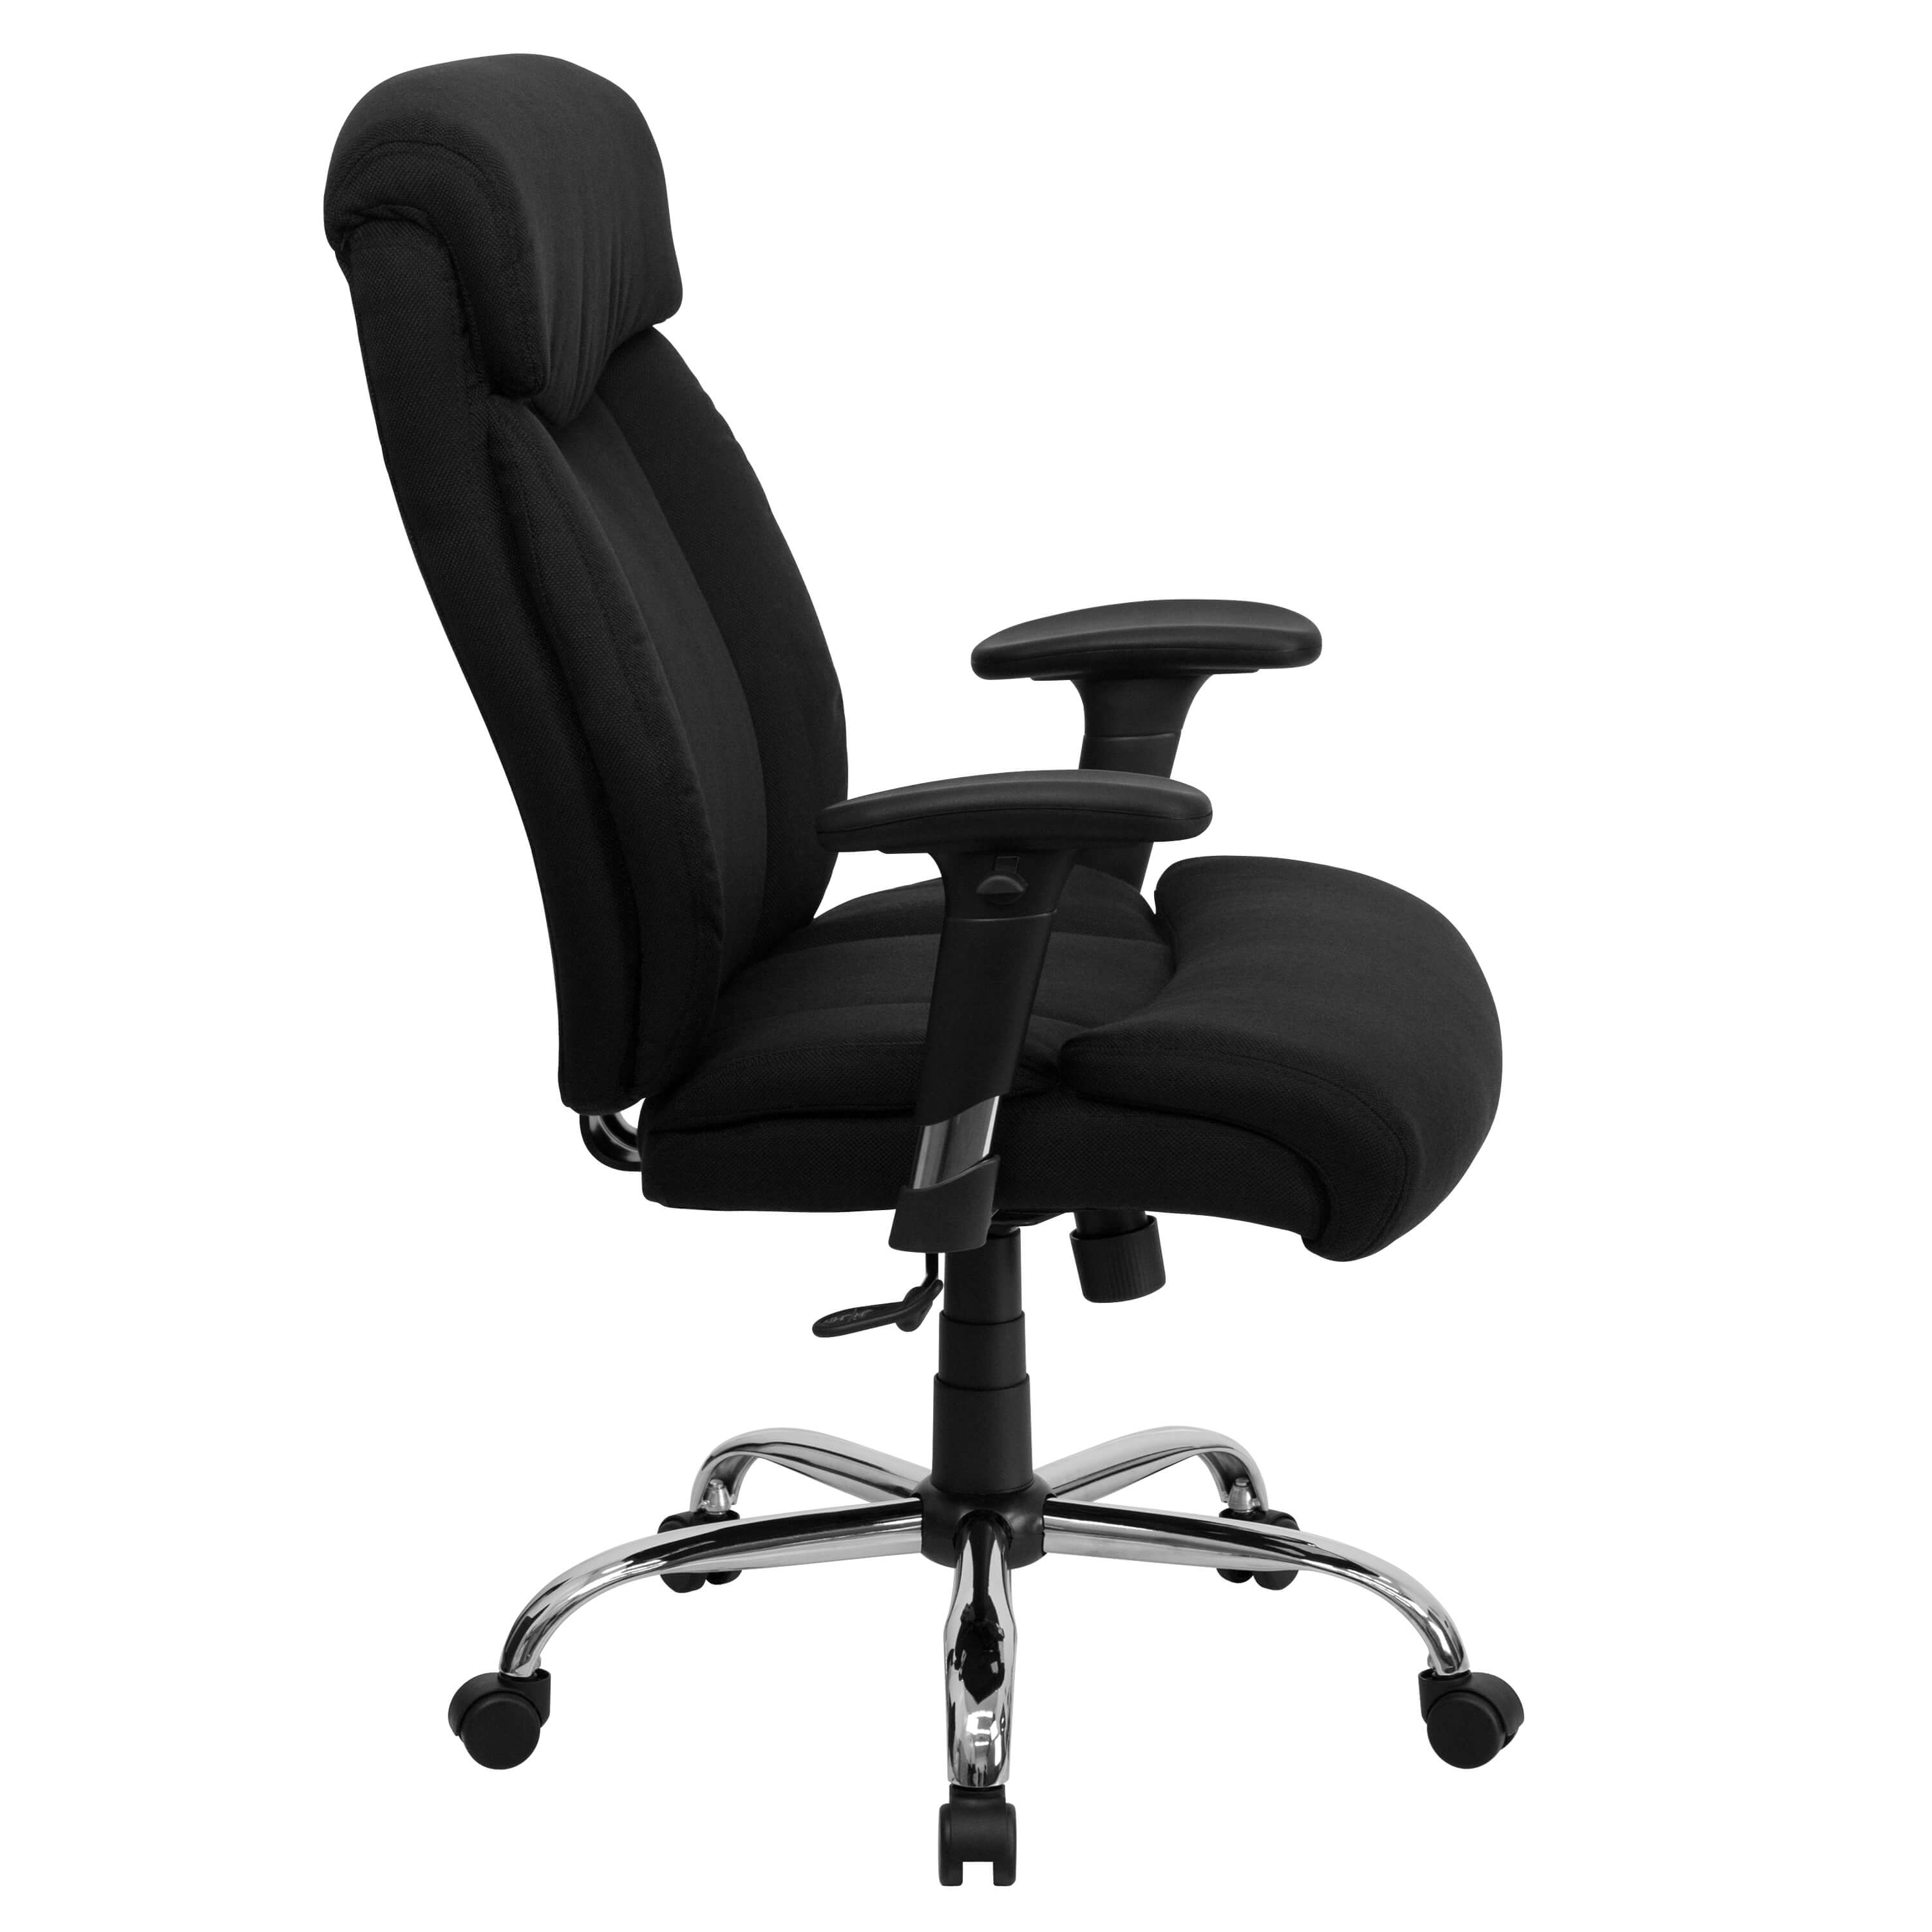 Heavy duty ergonomic office chairs side view